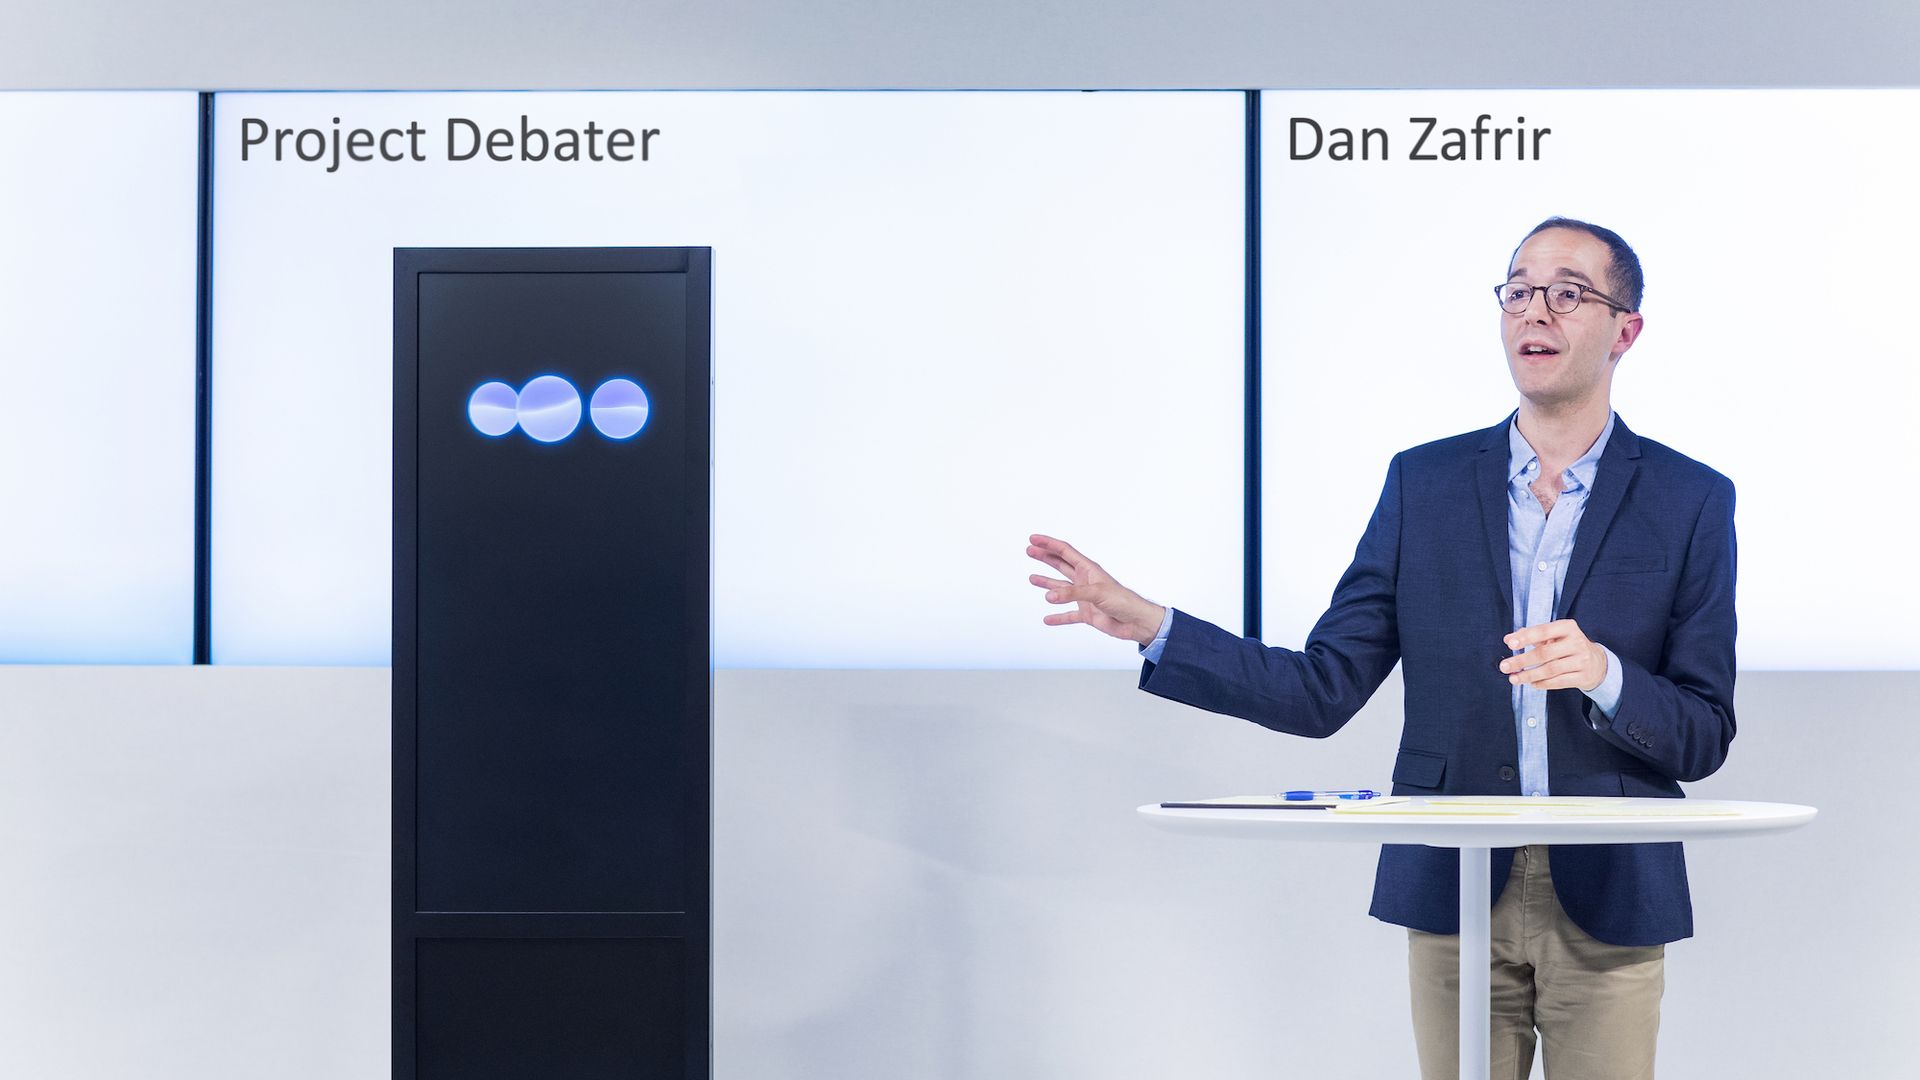 Human debater with box representing artificial intelligence debater